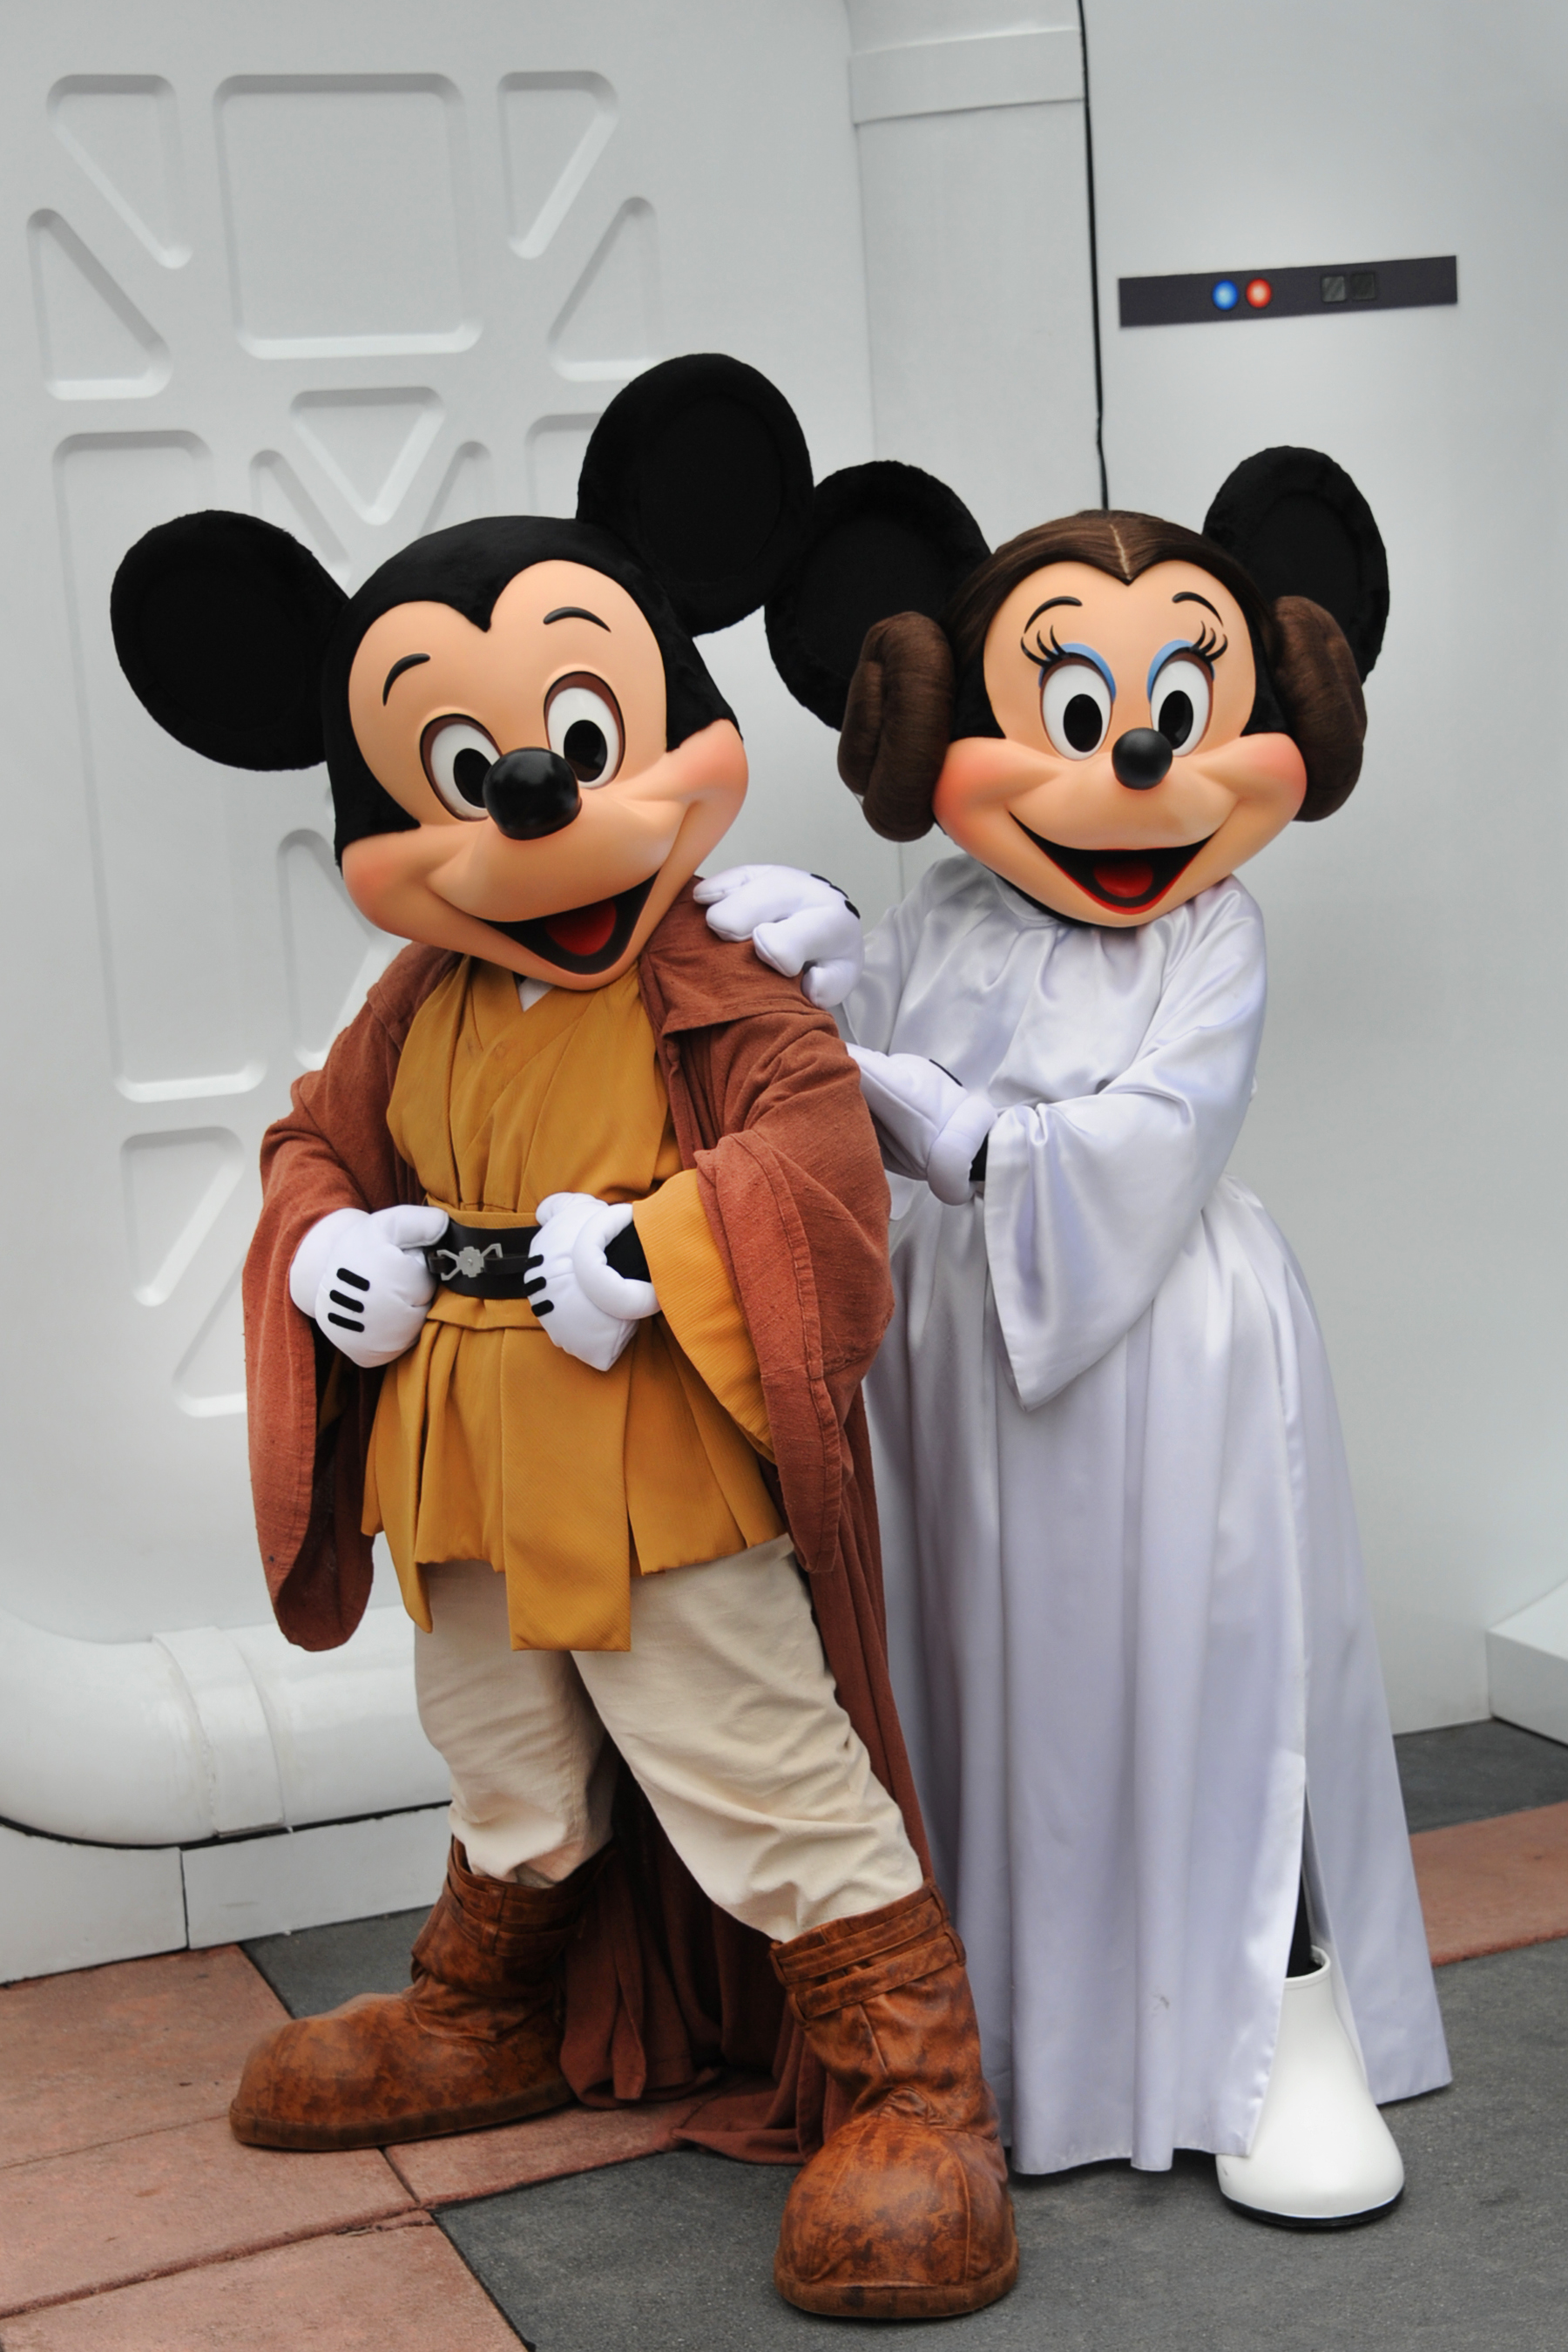 Pixie Dust Central – Star Wars Weekends At Walt Disney World (Video)